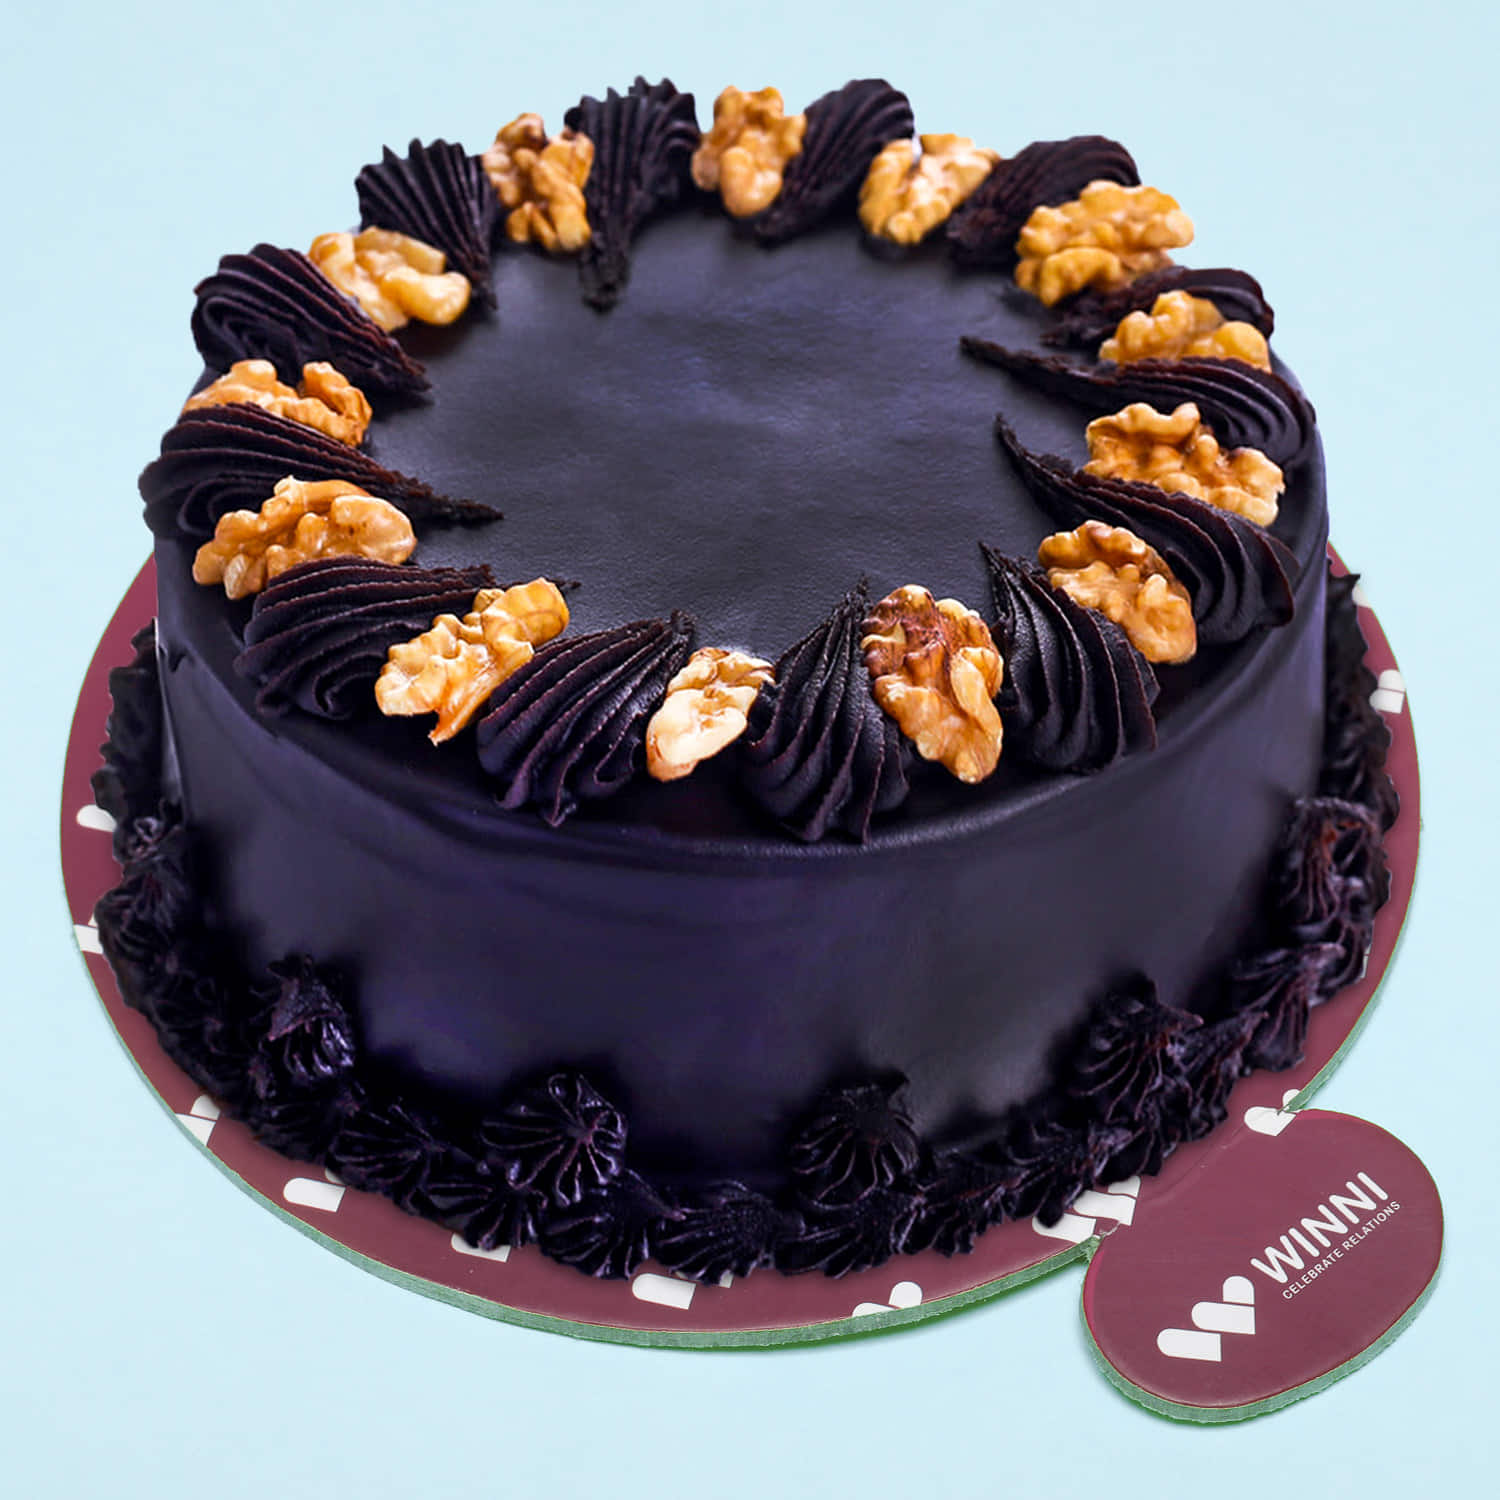 Chocolate Walnut Coffee Cake | Cooking Goals